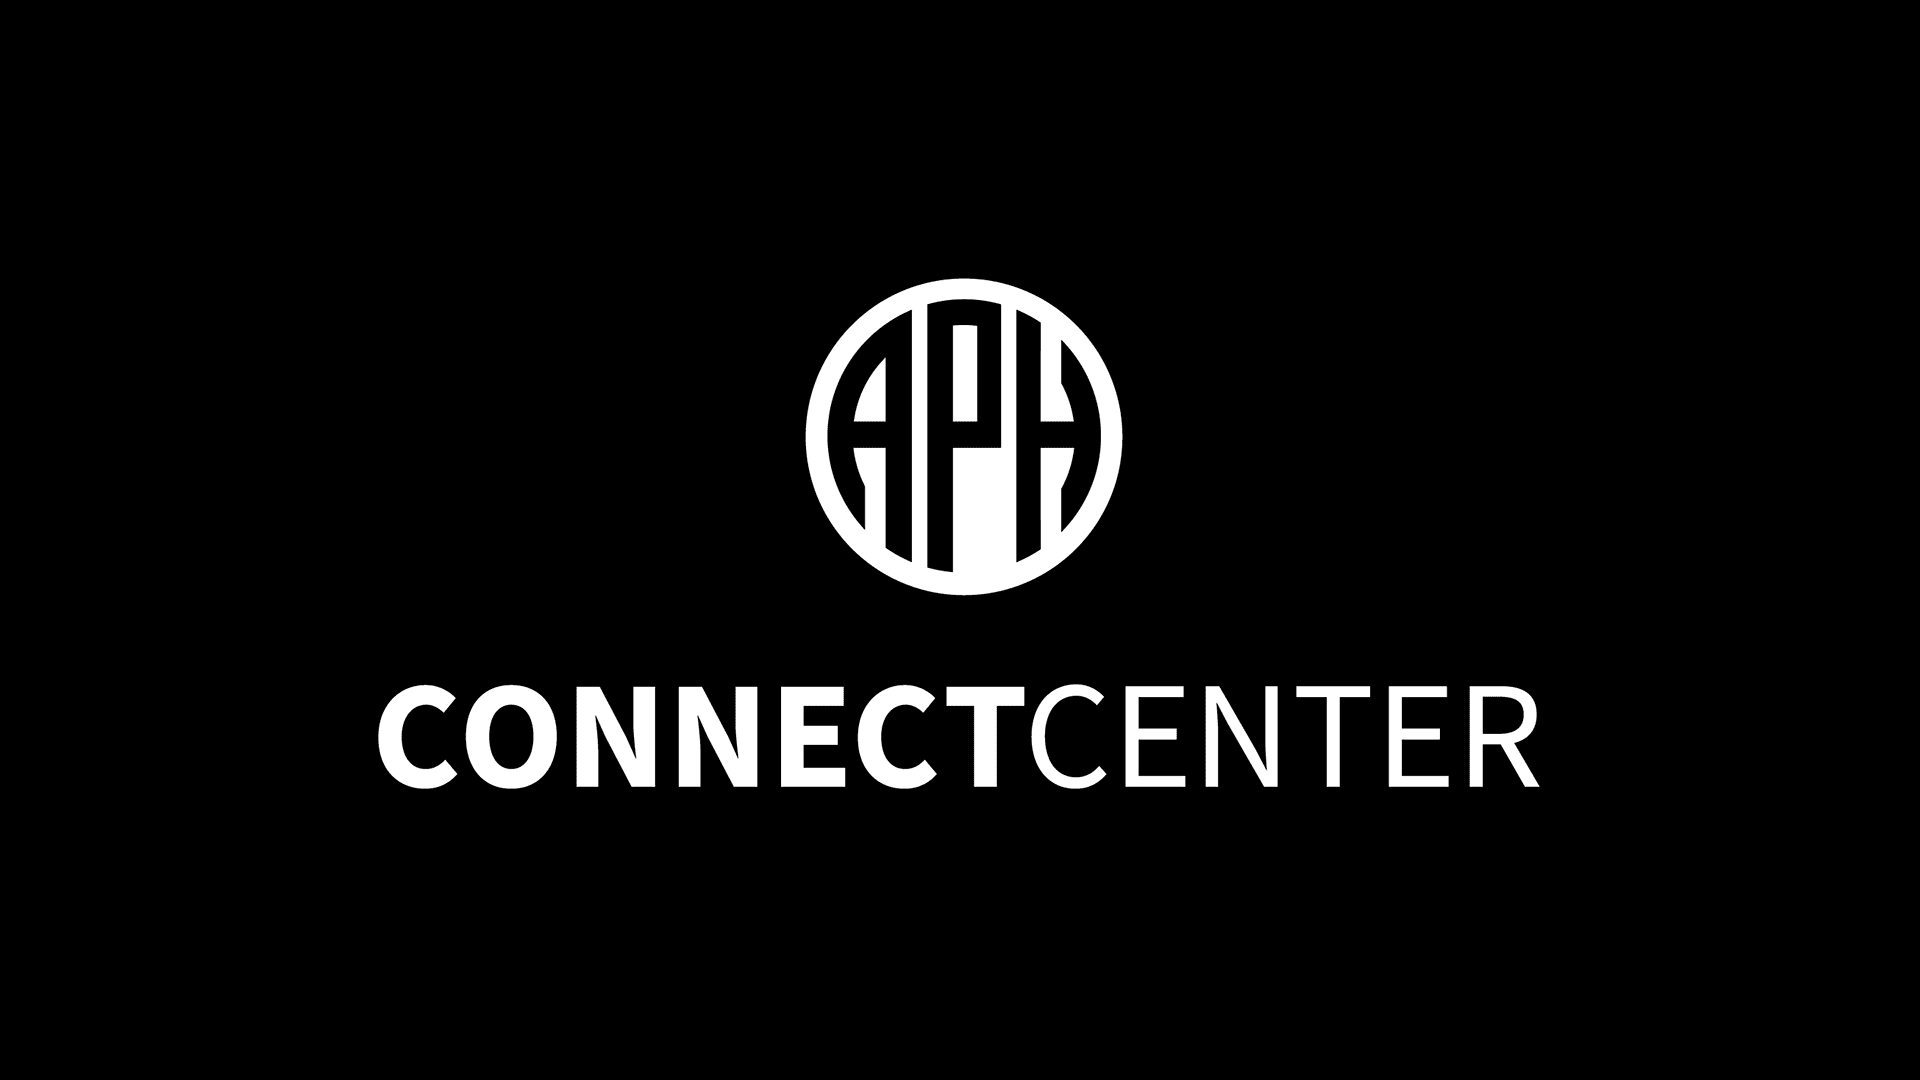 APH ConnectCenter wordmark.